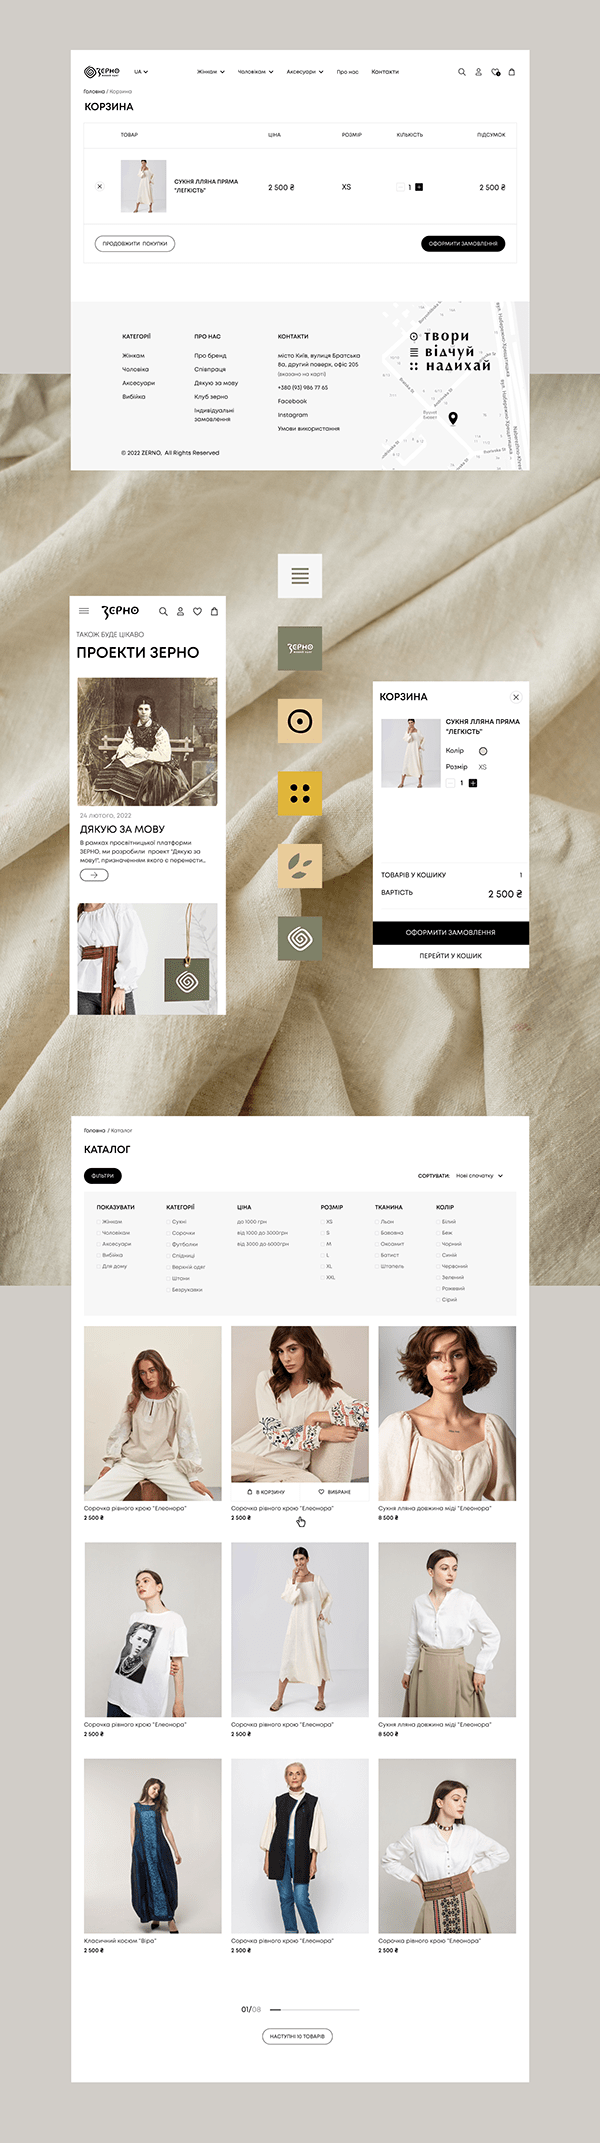 E-commerce design for the Zerno brand